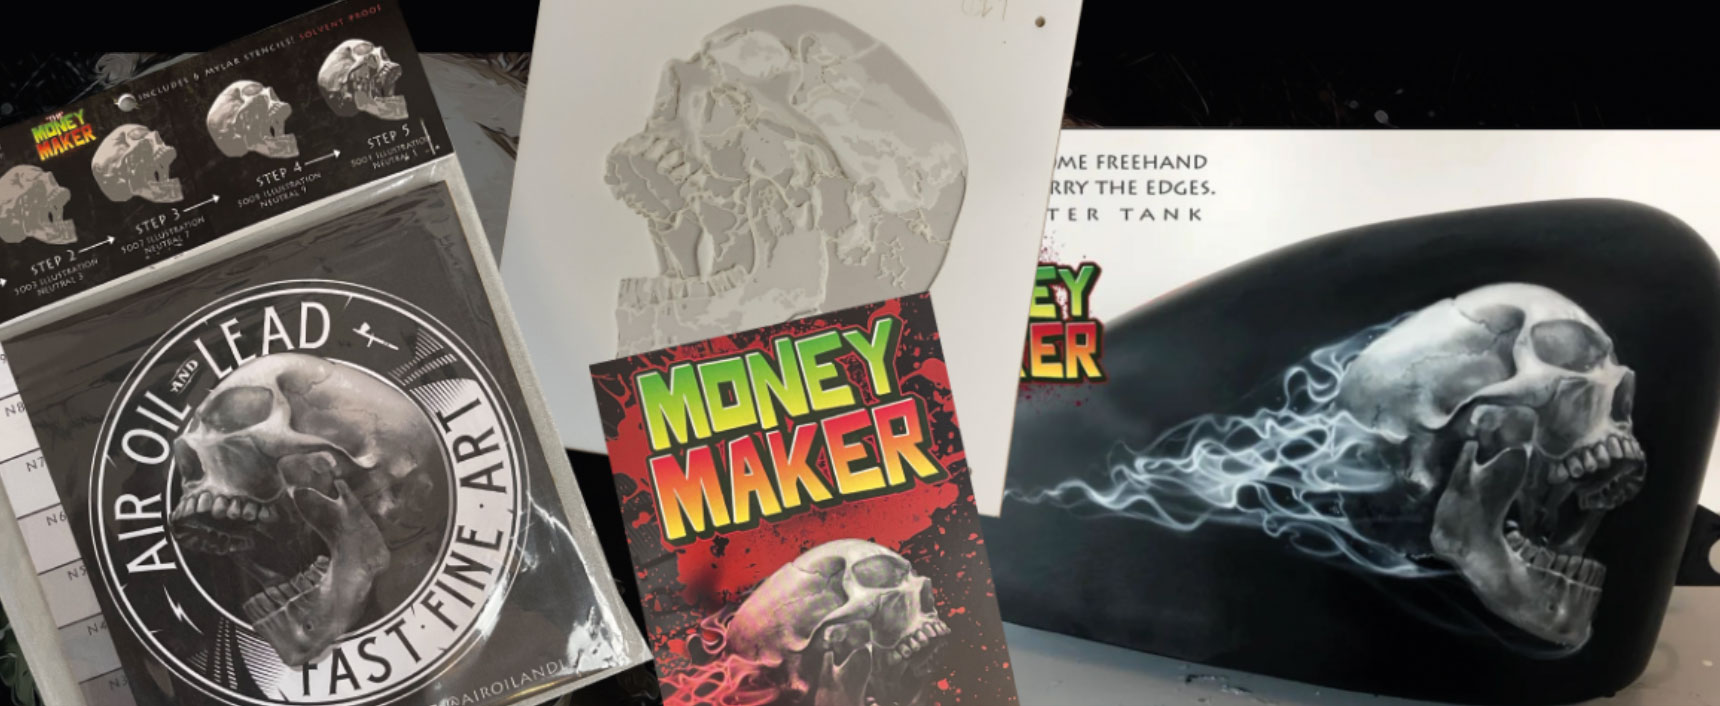 The Money Maker: Six-piece skull stencil set from Steve Gibson